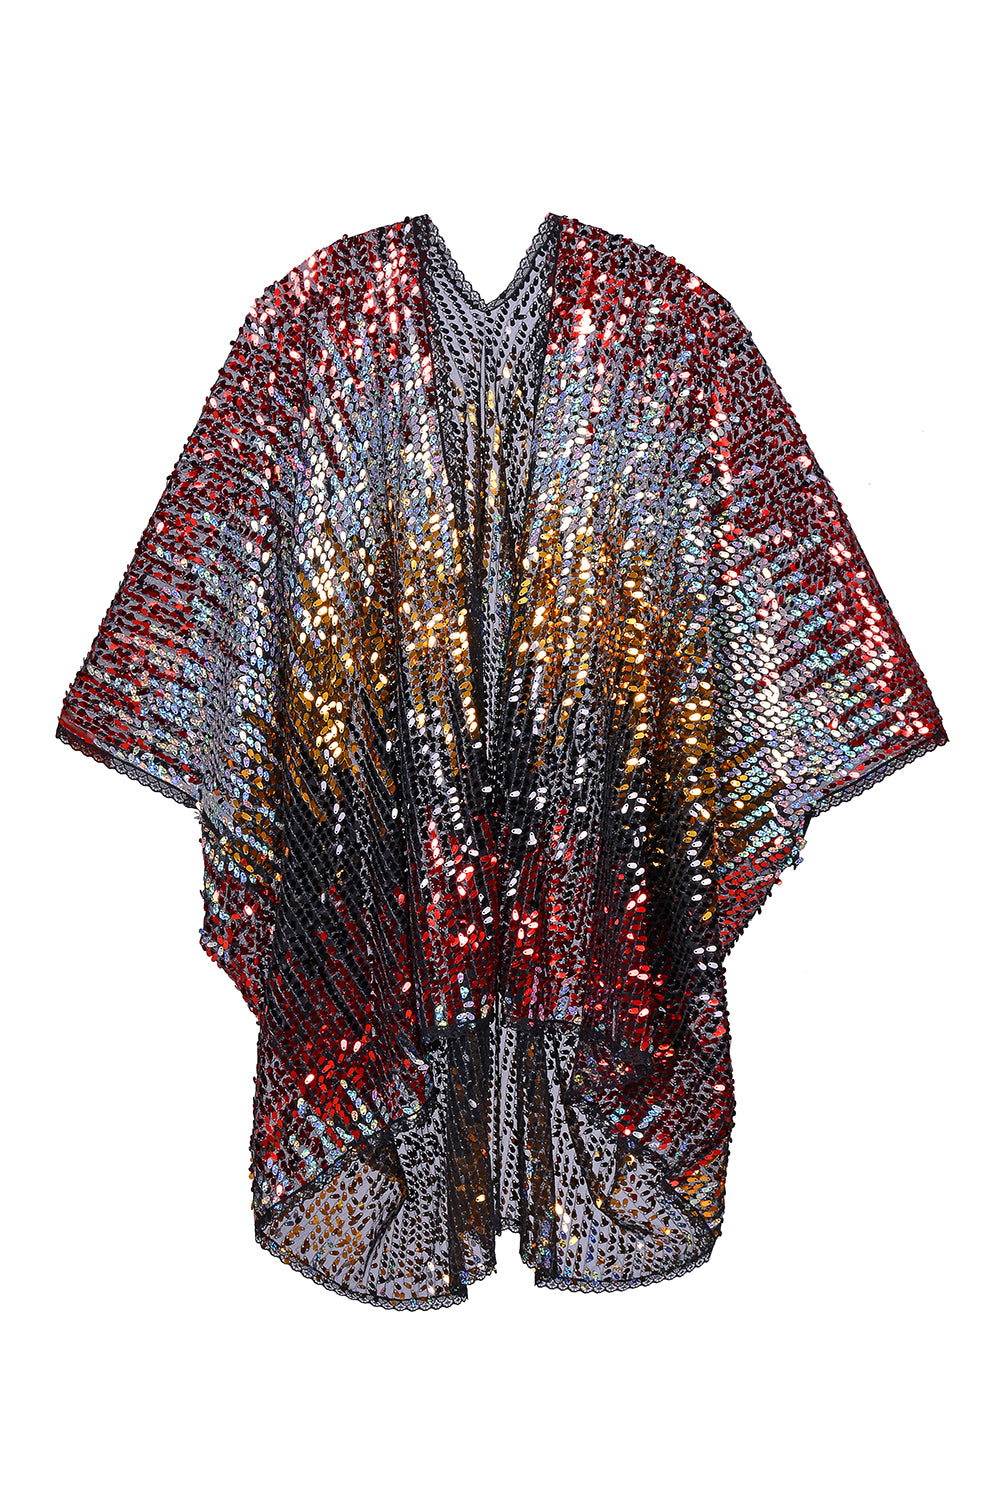 Disco Sequin Kimono - Midnight Fairy